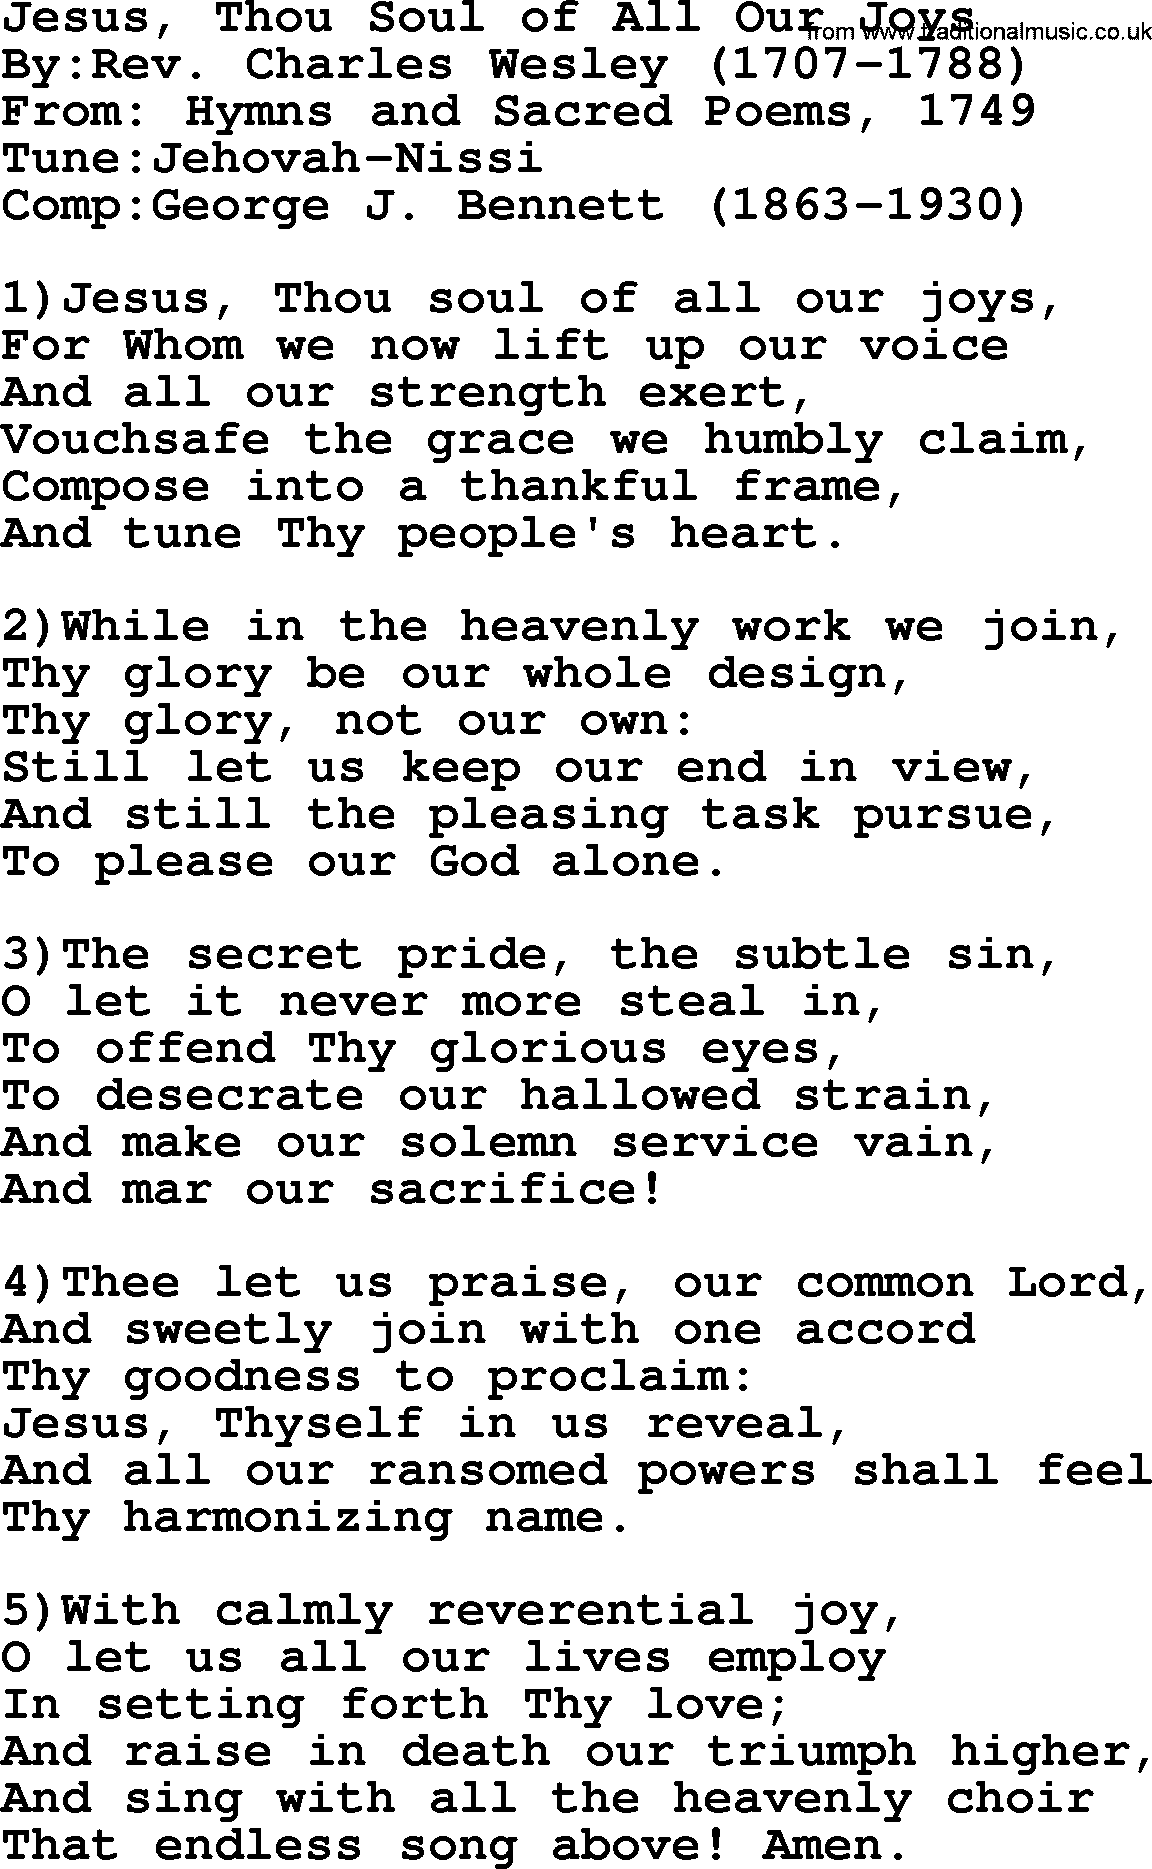 Methodist Hymn: Jesus, Thou Soul Of All Our Joys, lyrics